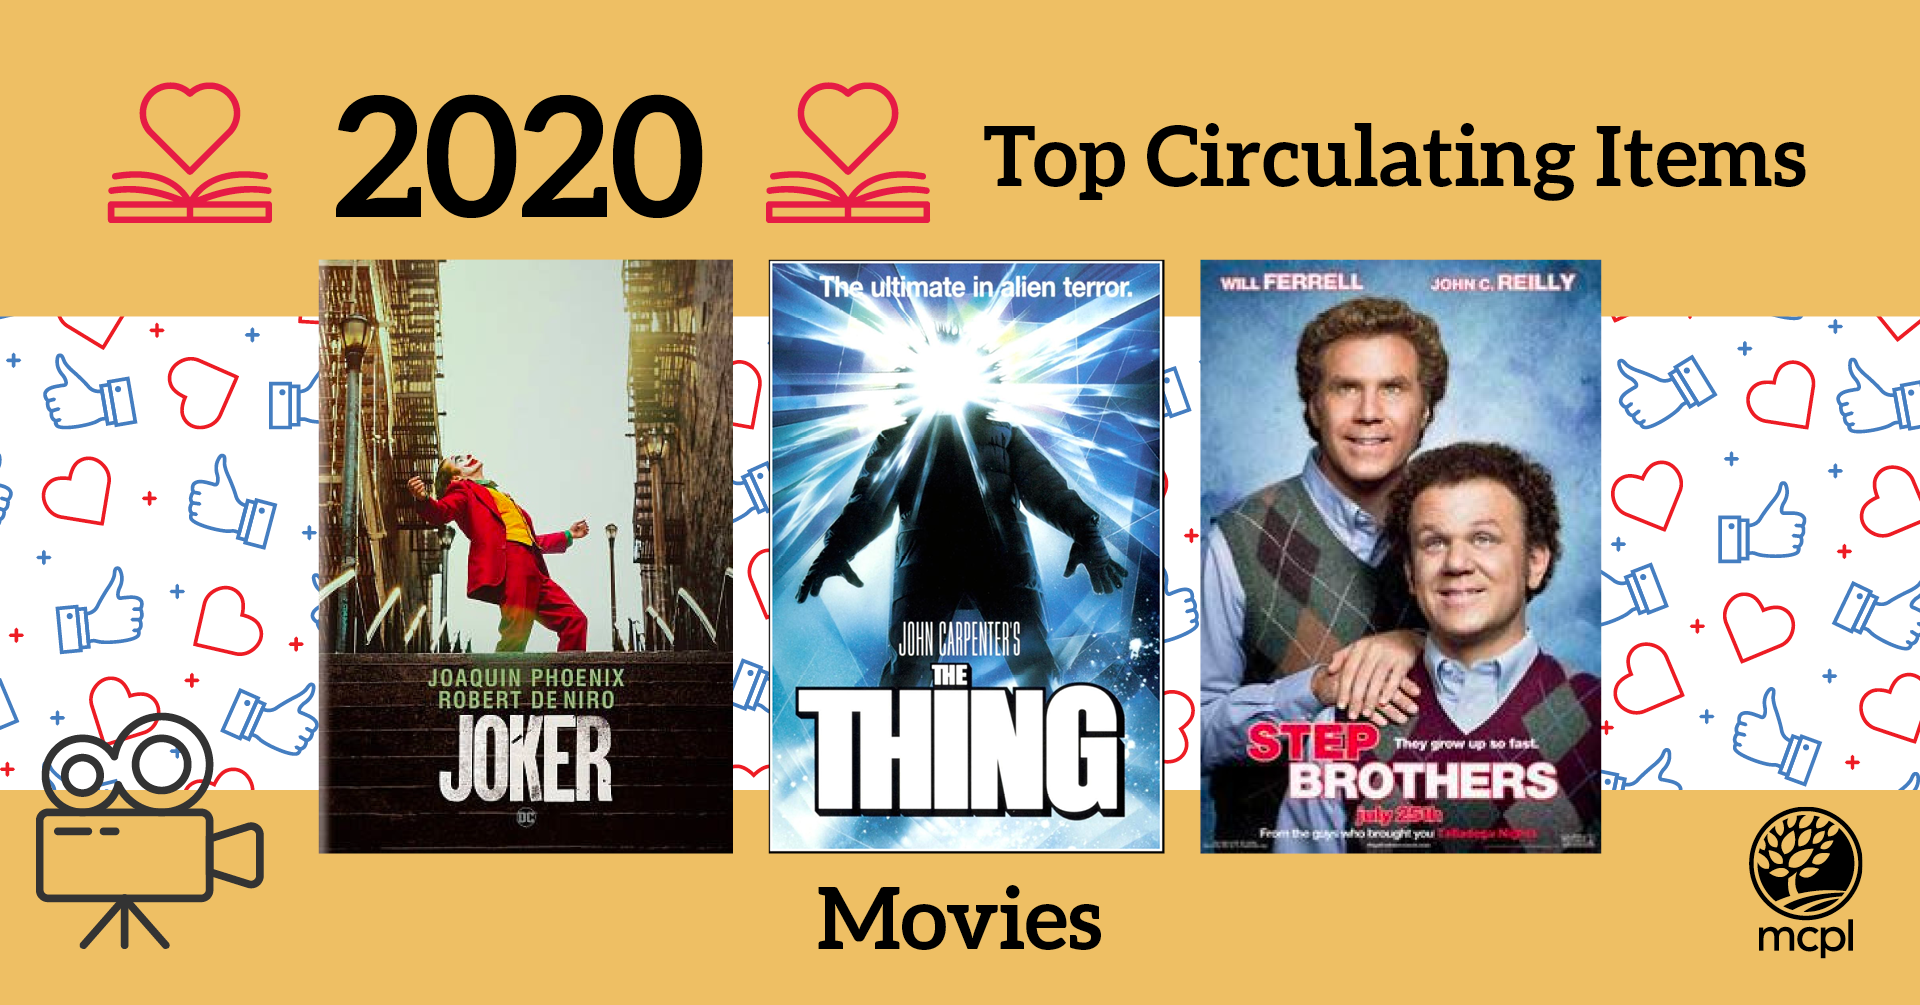 2020 Top Circulating Items: Movies